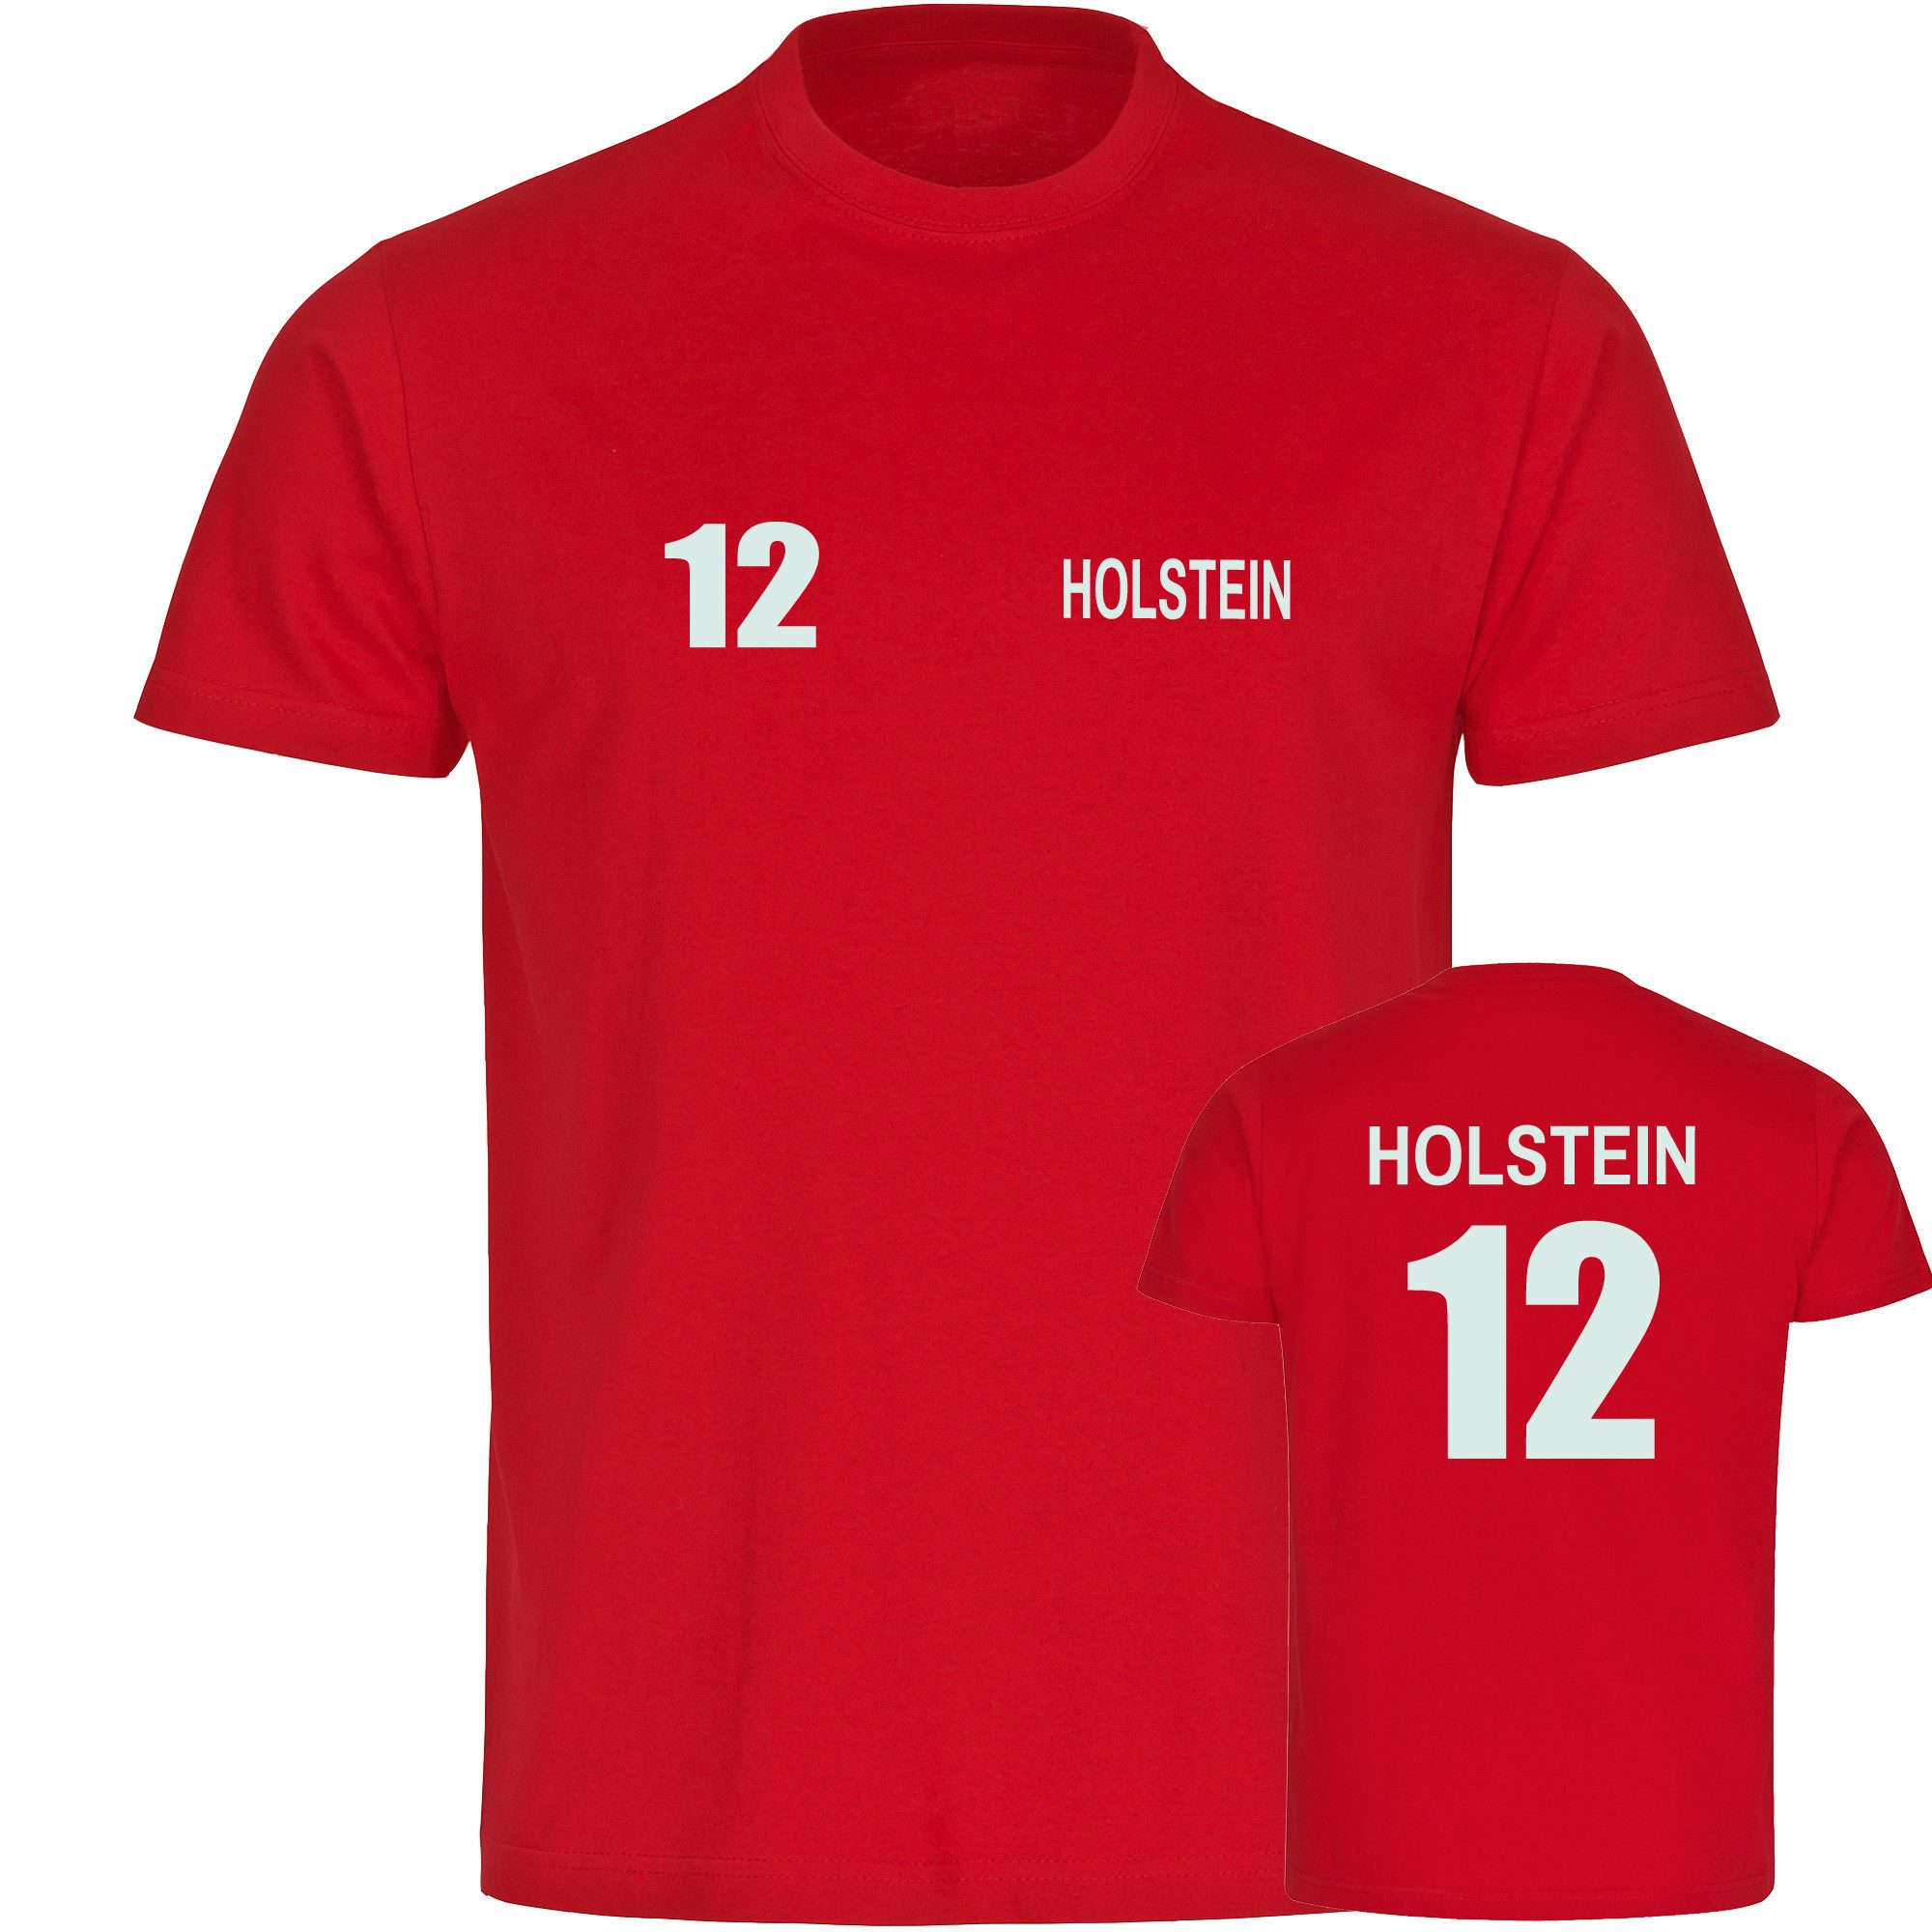 multifanshop T-Shirt Herren Holstein - Trikot 12 - Männer